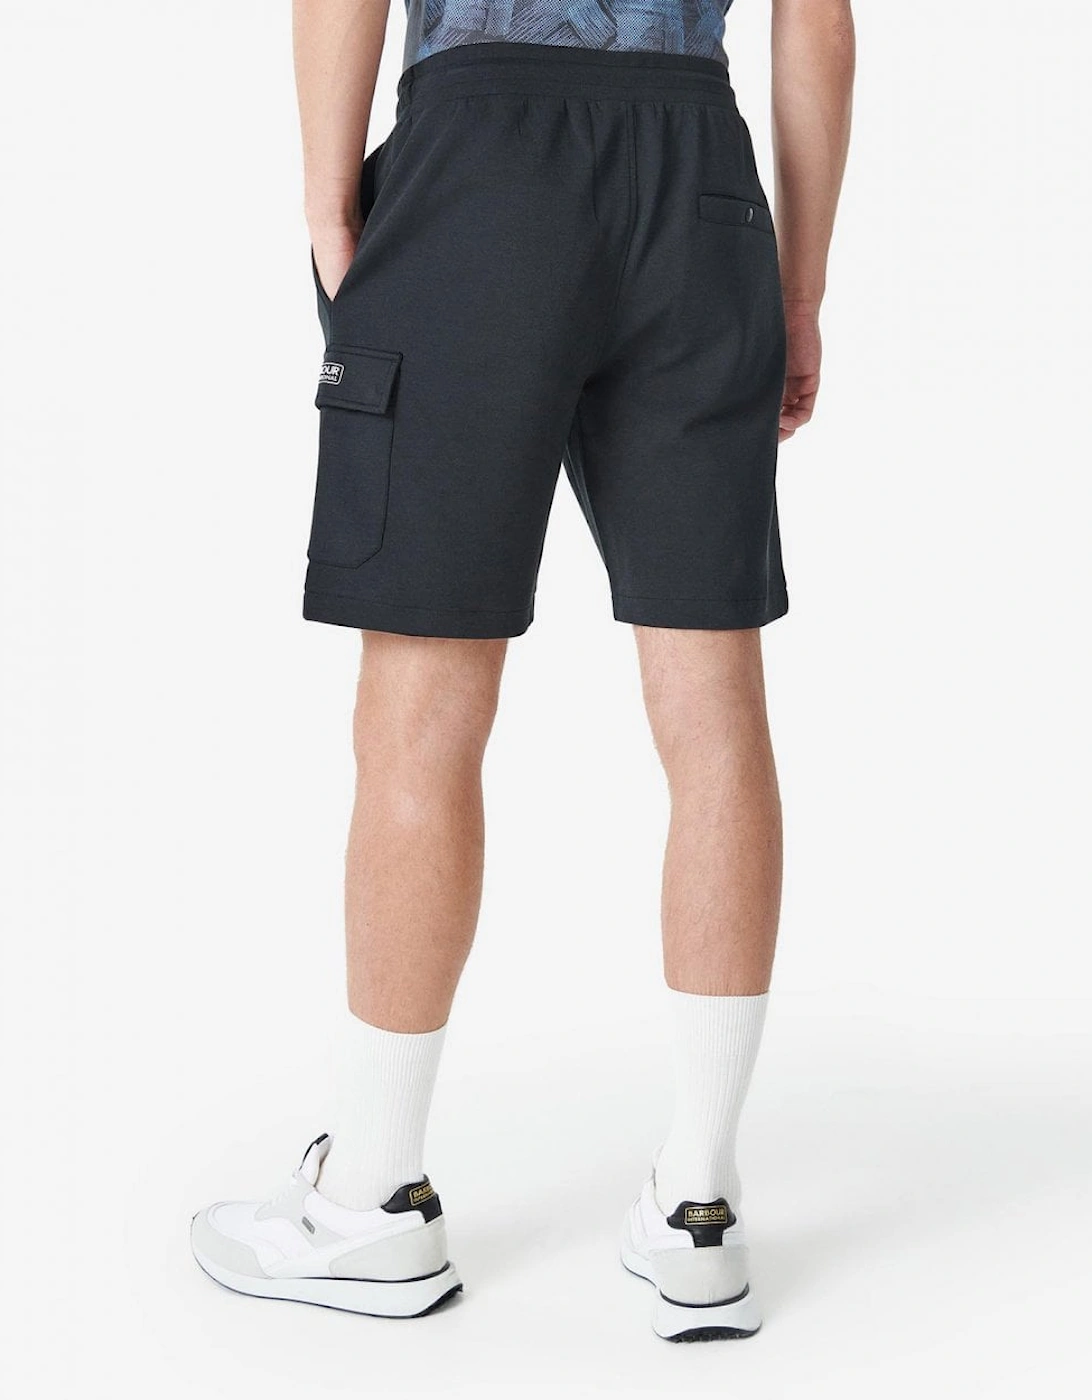 Voyager Mens Cotton Shorts